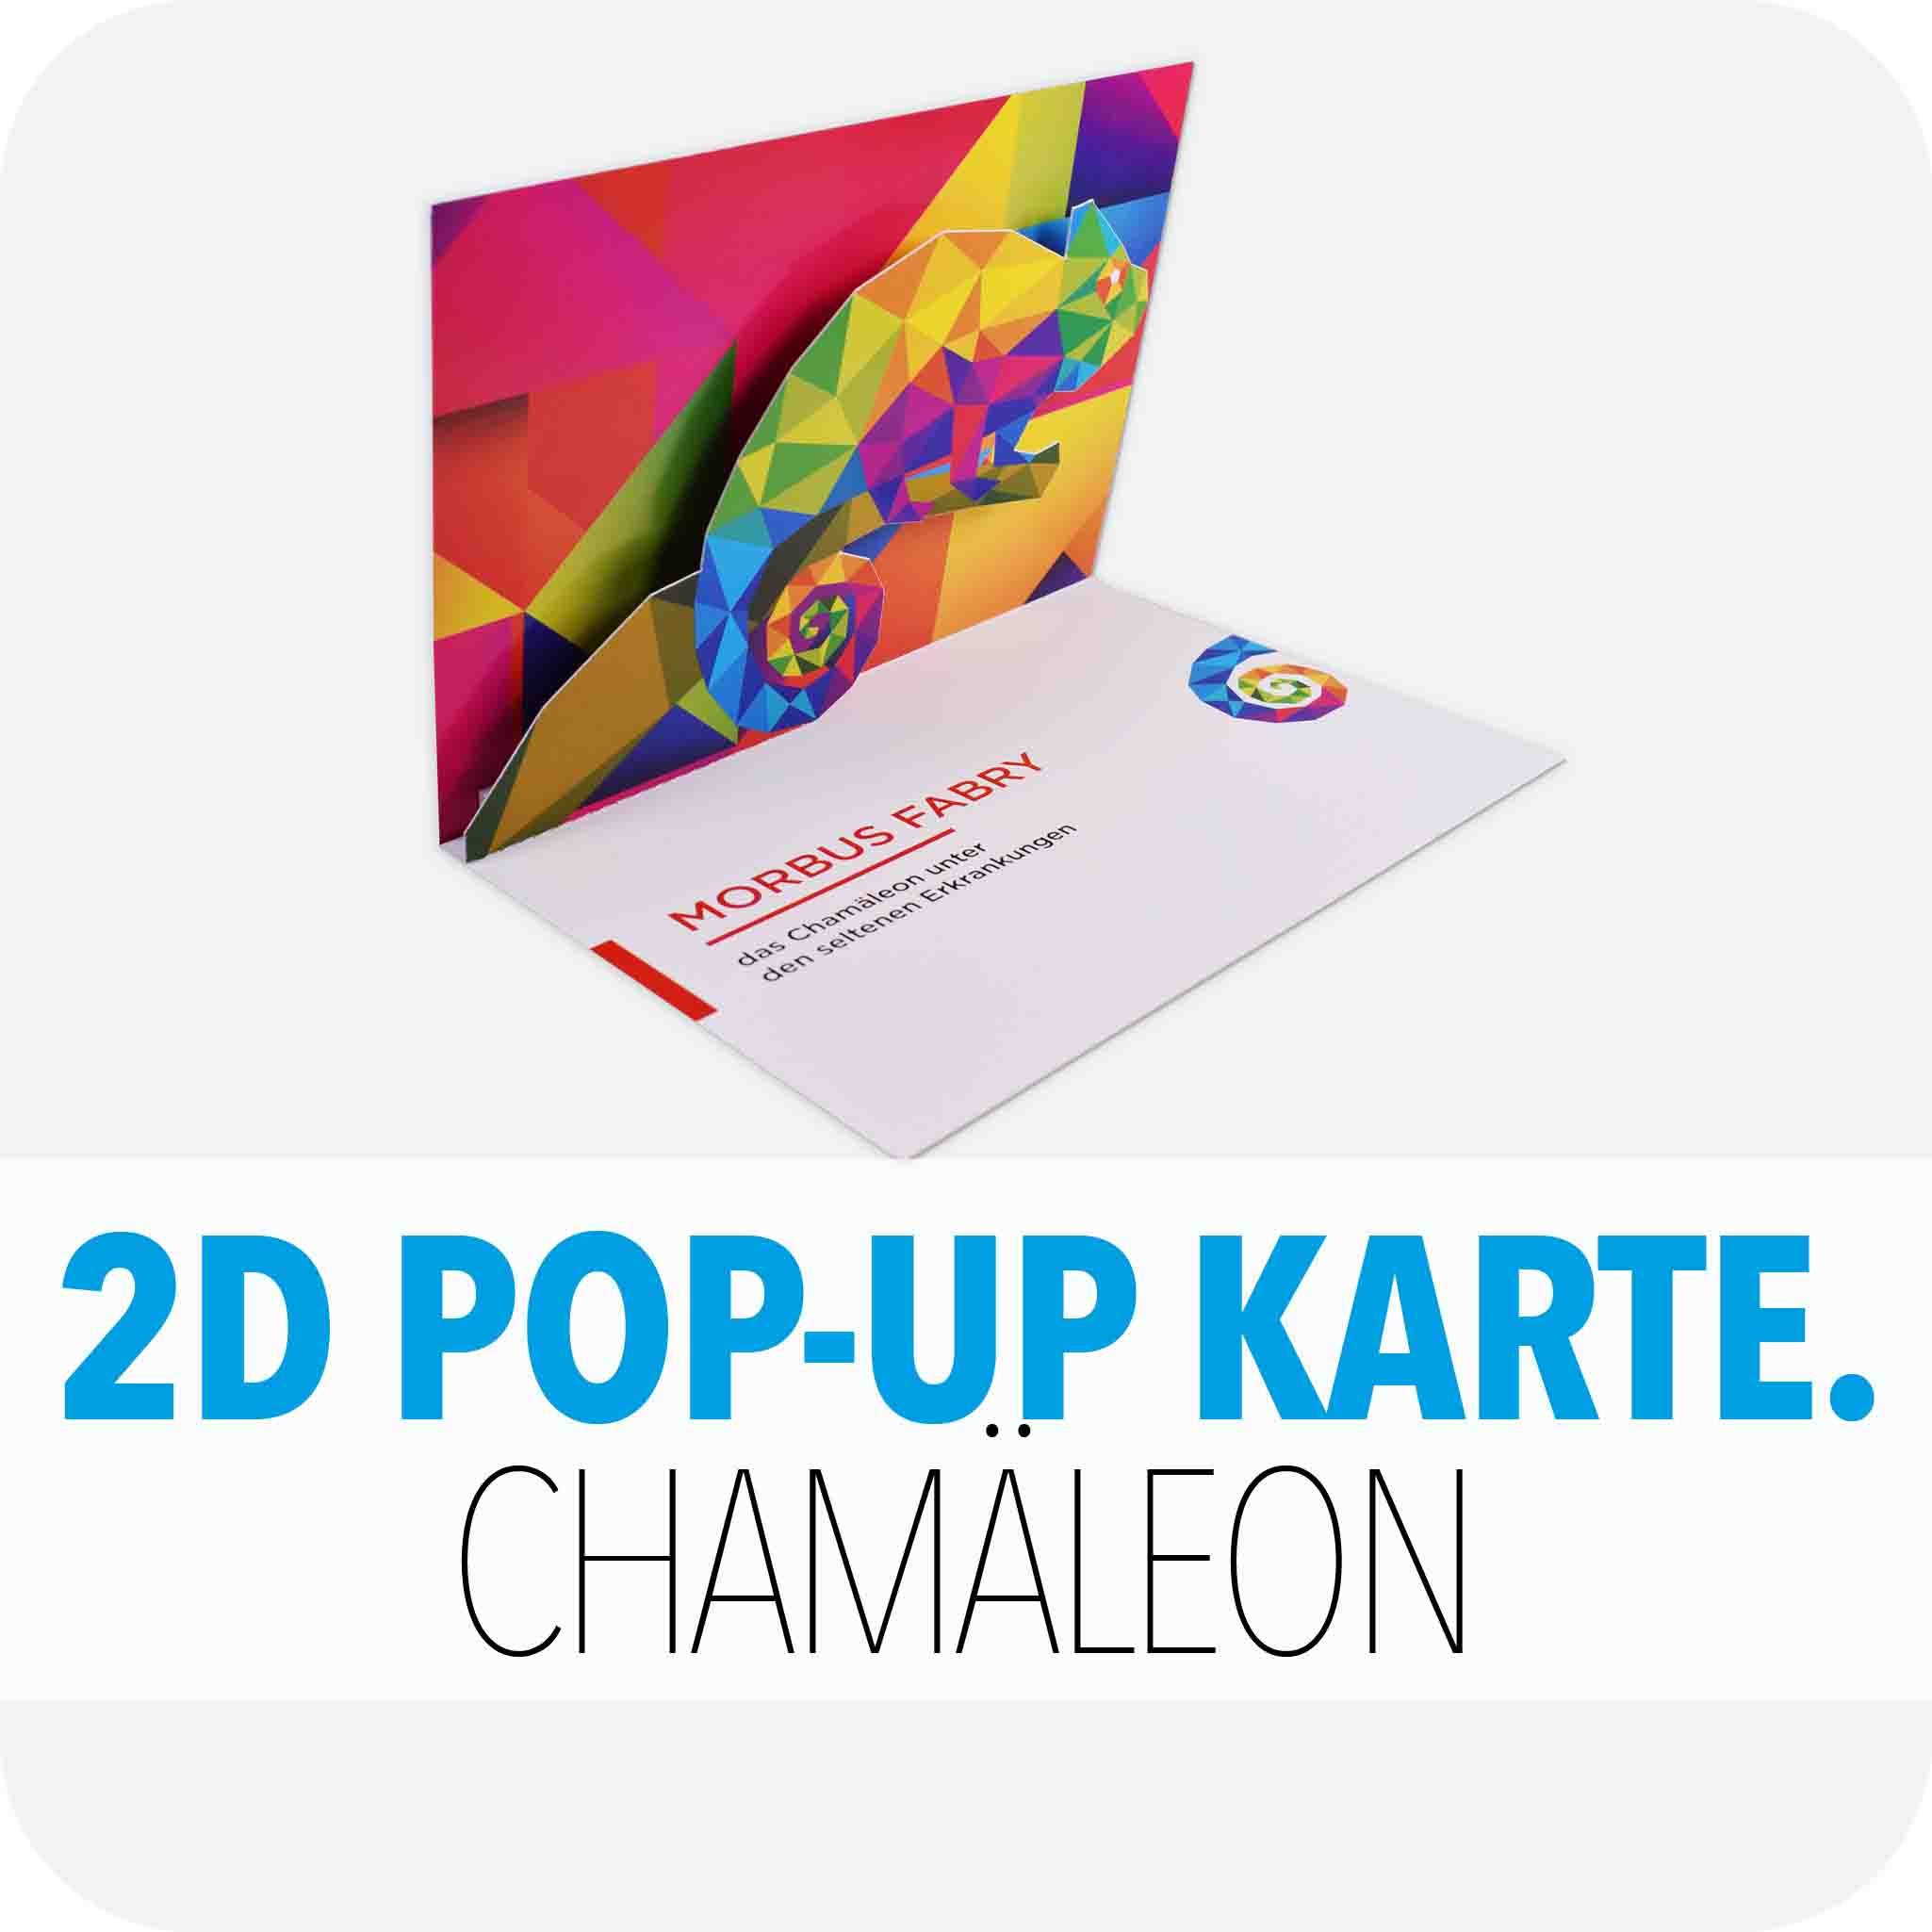 2D Pop-Up Karte Chamaeleon